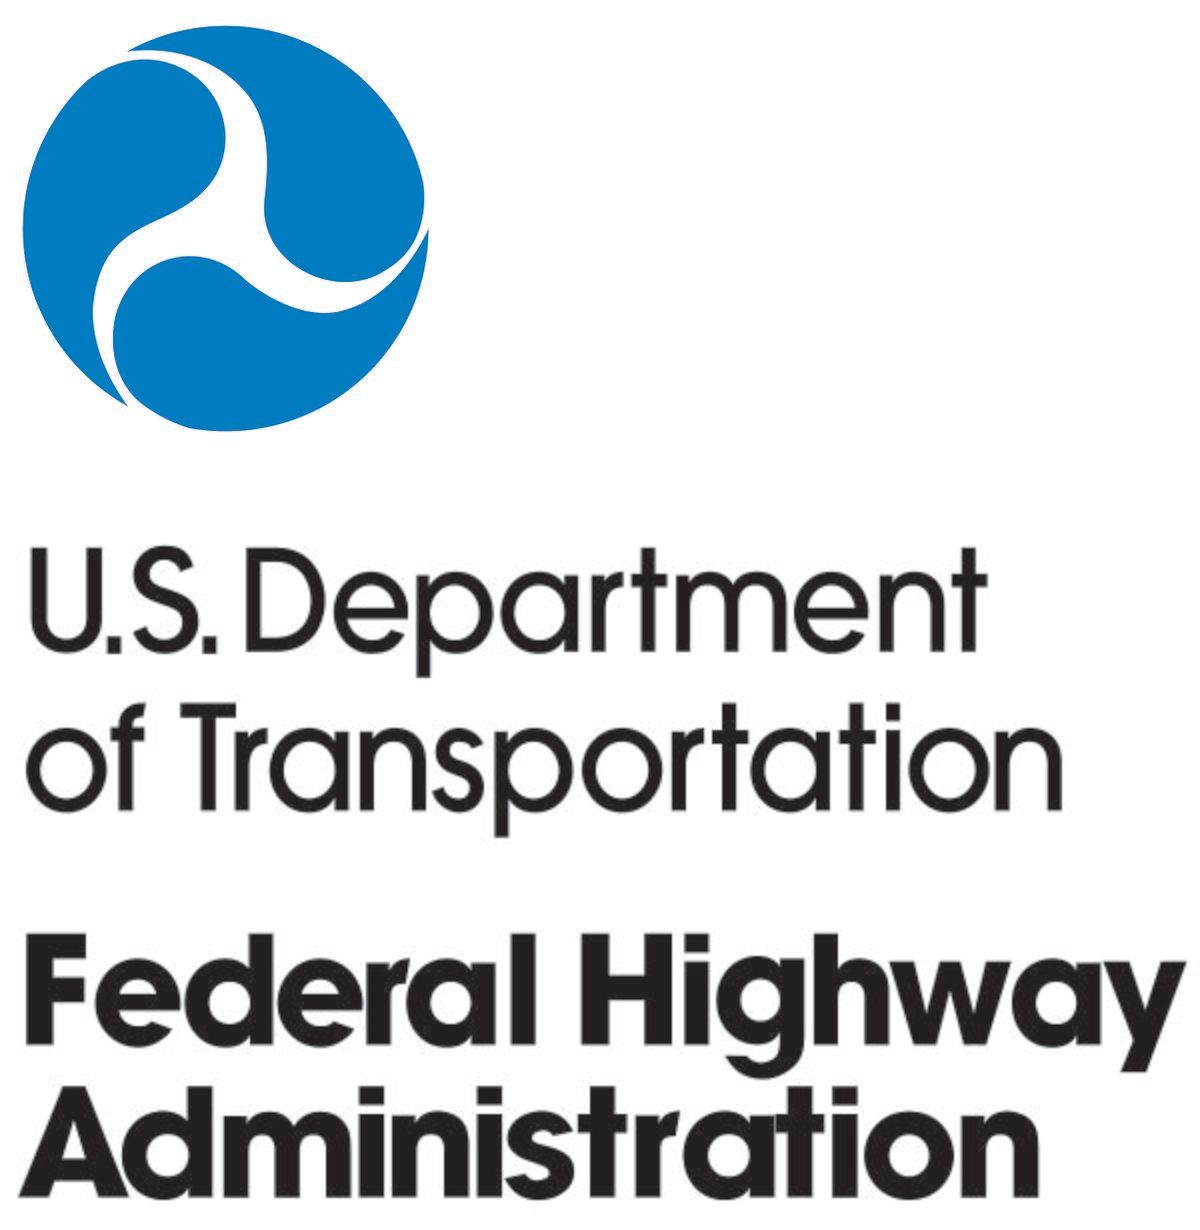 U.S. Department of Transportation, Federal Highway Administration